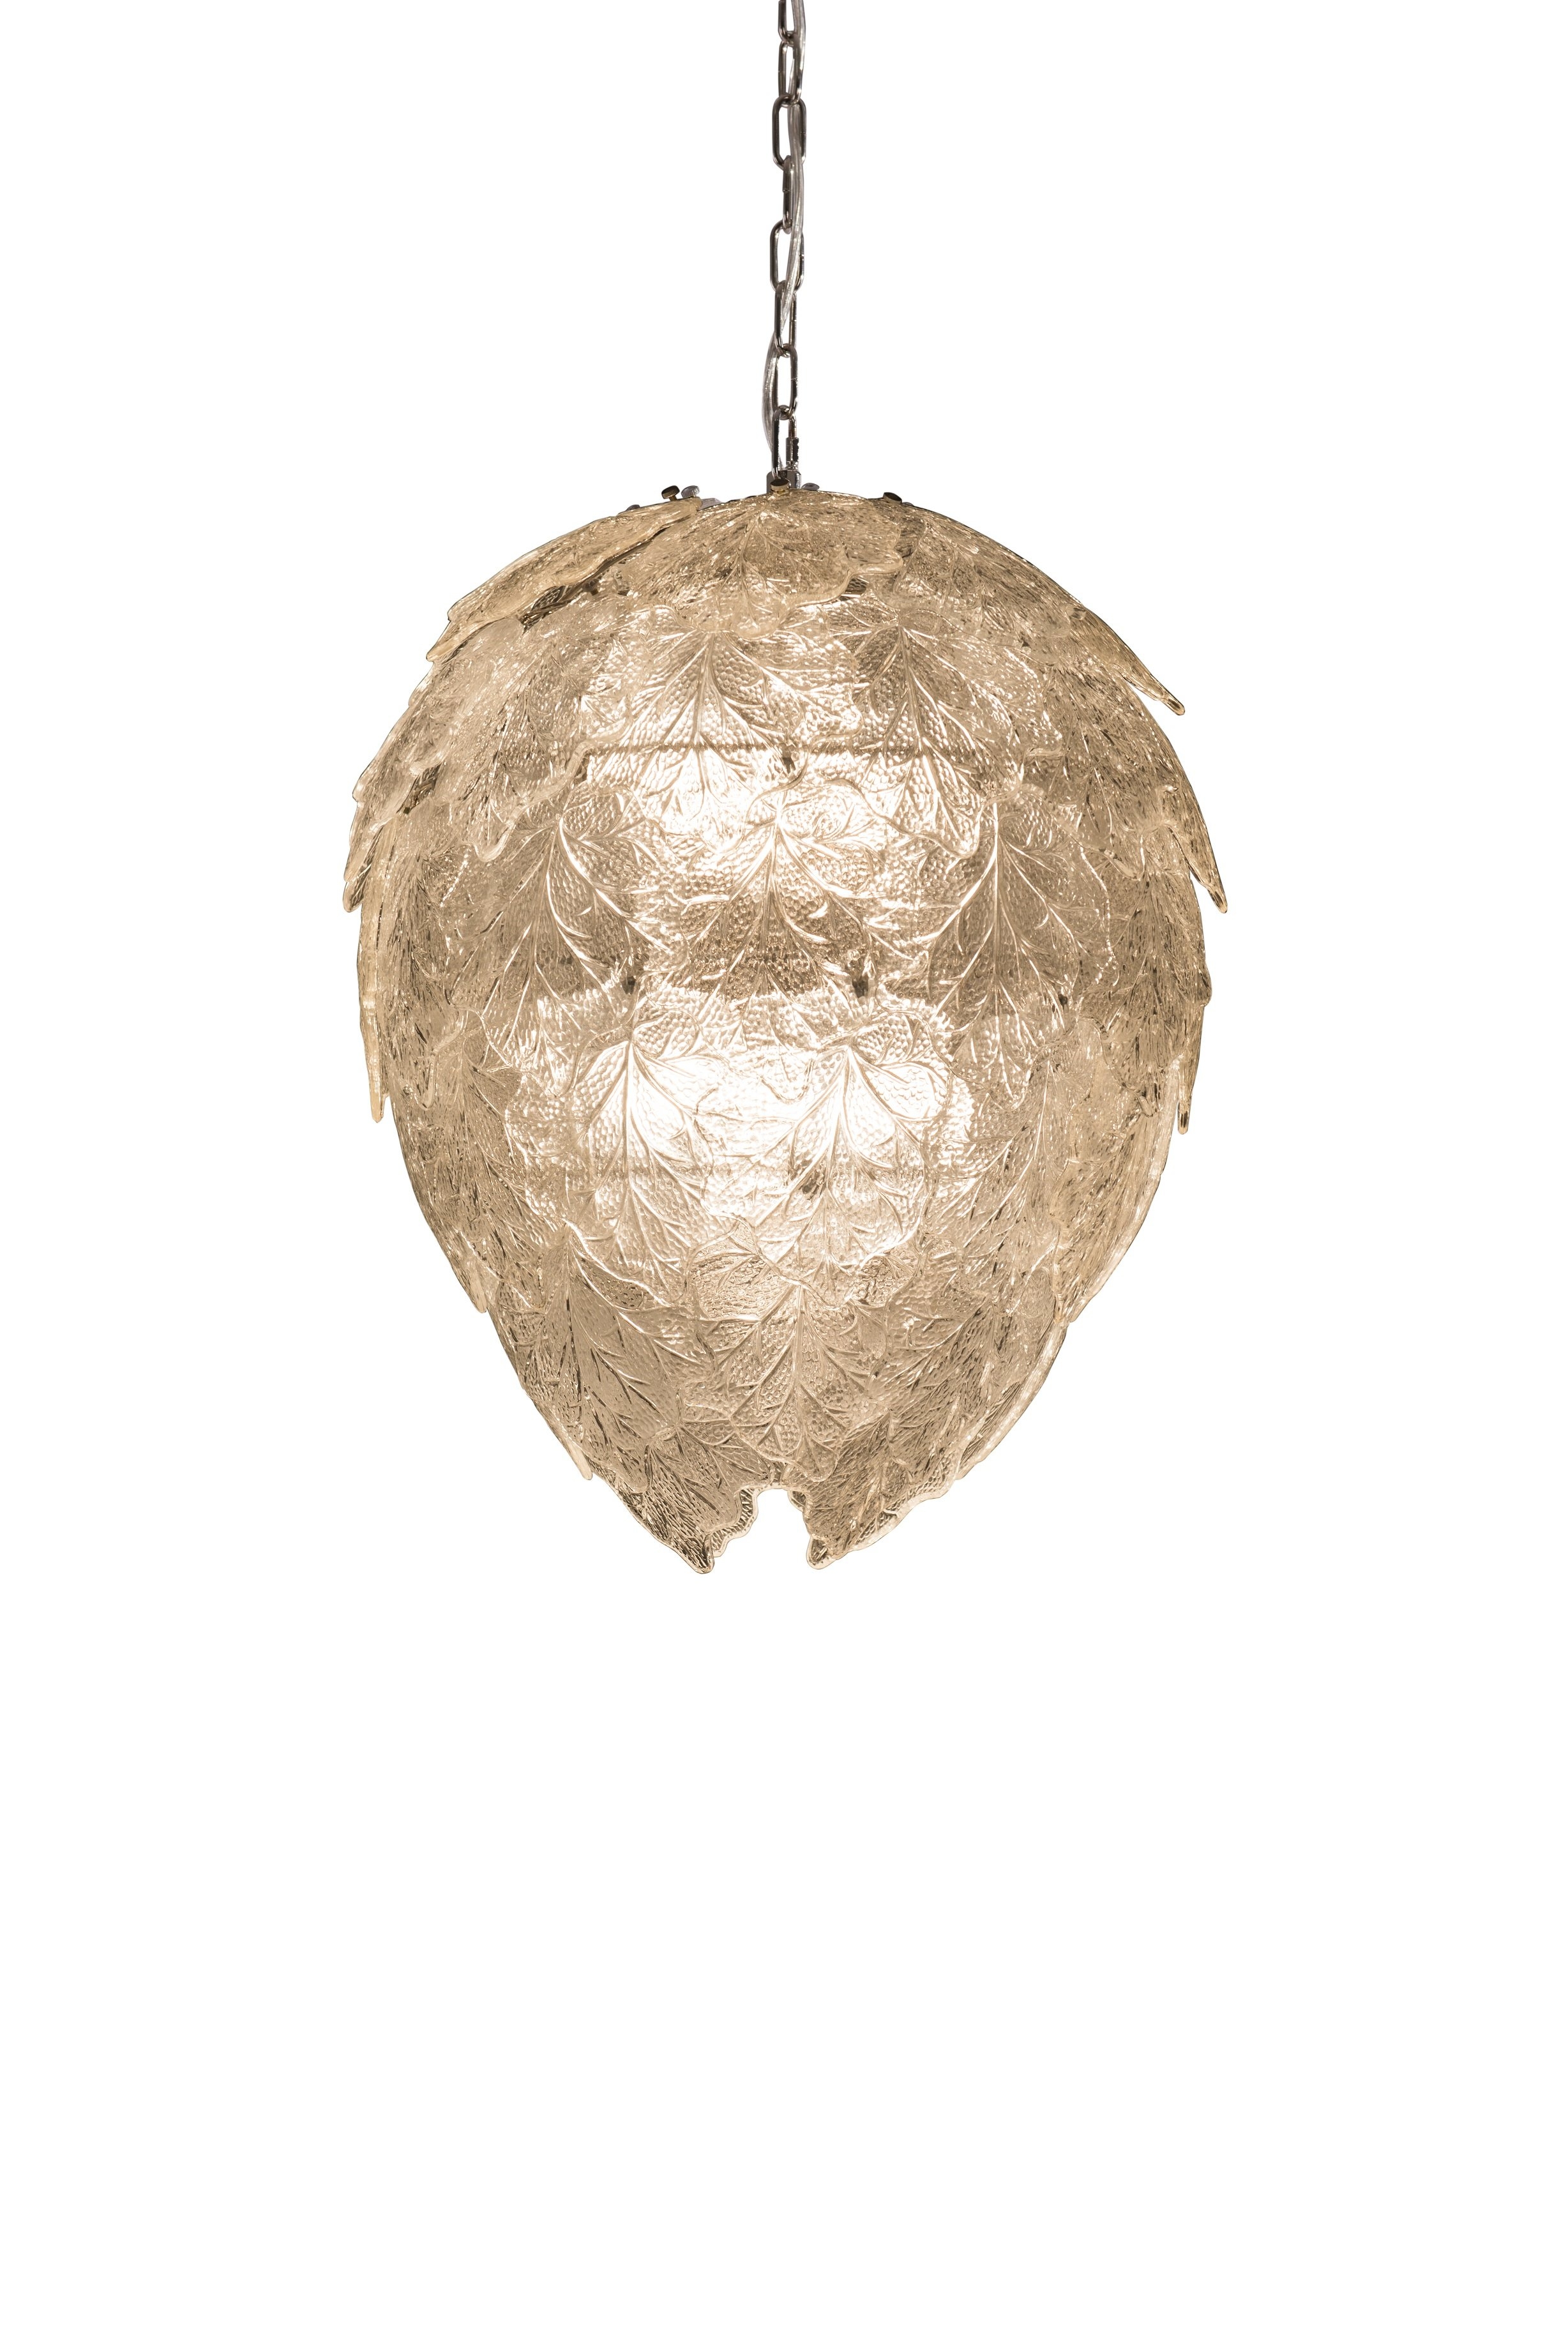 Rv Astley – Pendant light – Ametrine Clear Glass Leaf – small – large – Ametrine Large (Weight 26.5kg) – Pendant Lights – Stylishly Sophisticated